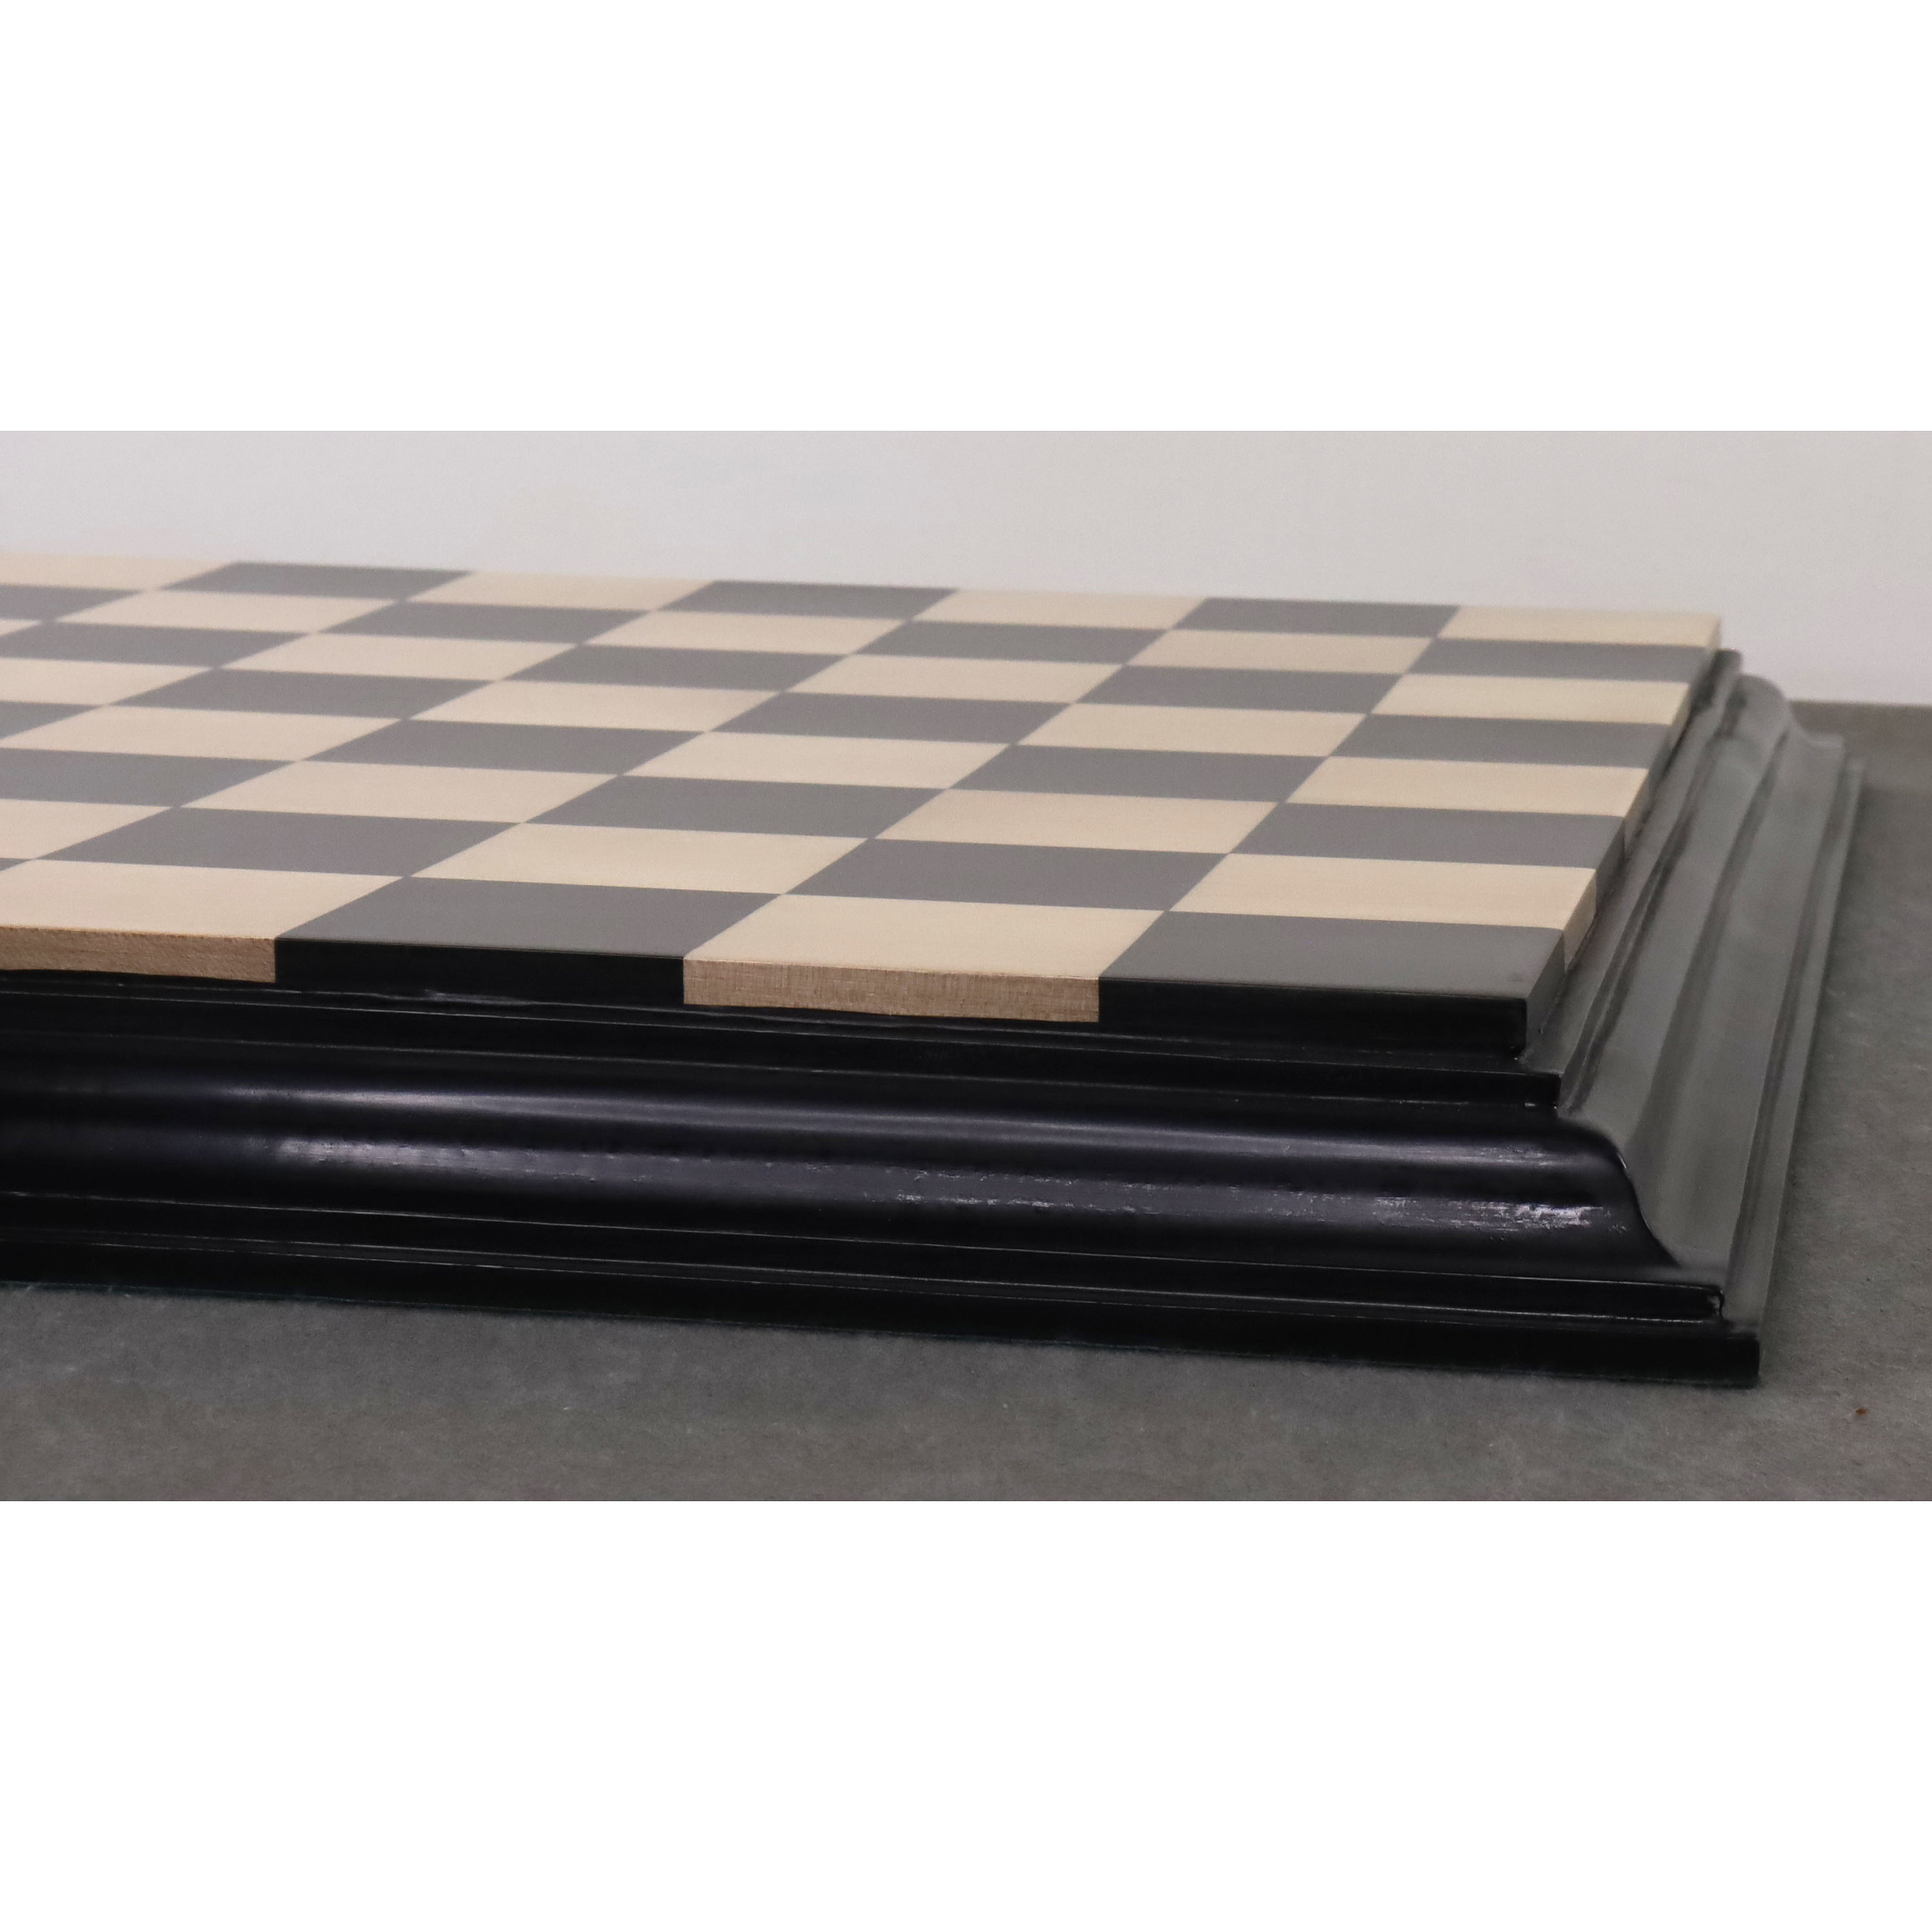 23" Ebony & Maple Wood Chessboard Sheesham borders Matt Finish 60 mm Square 